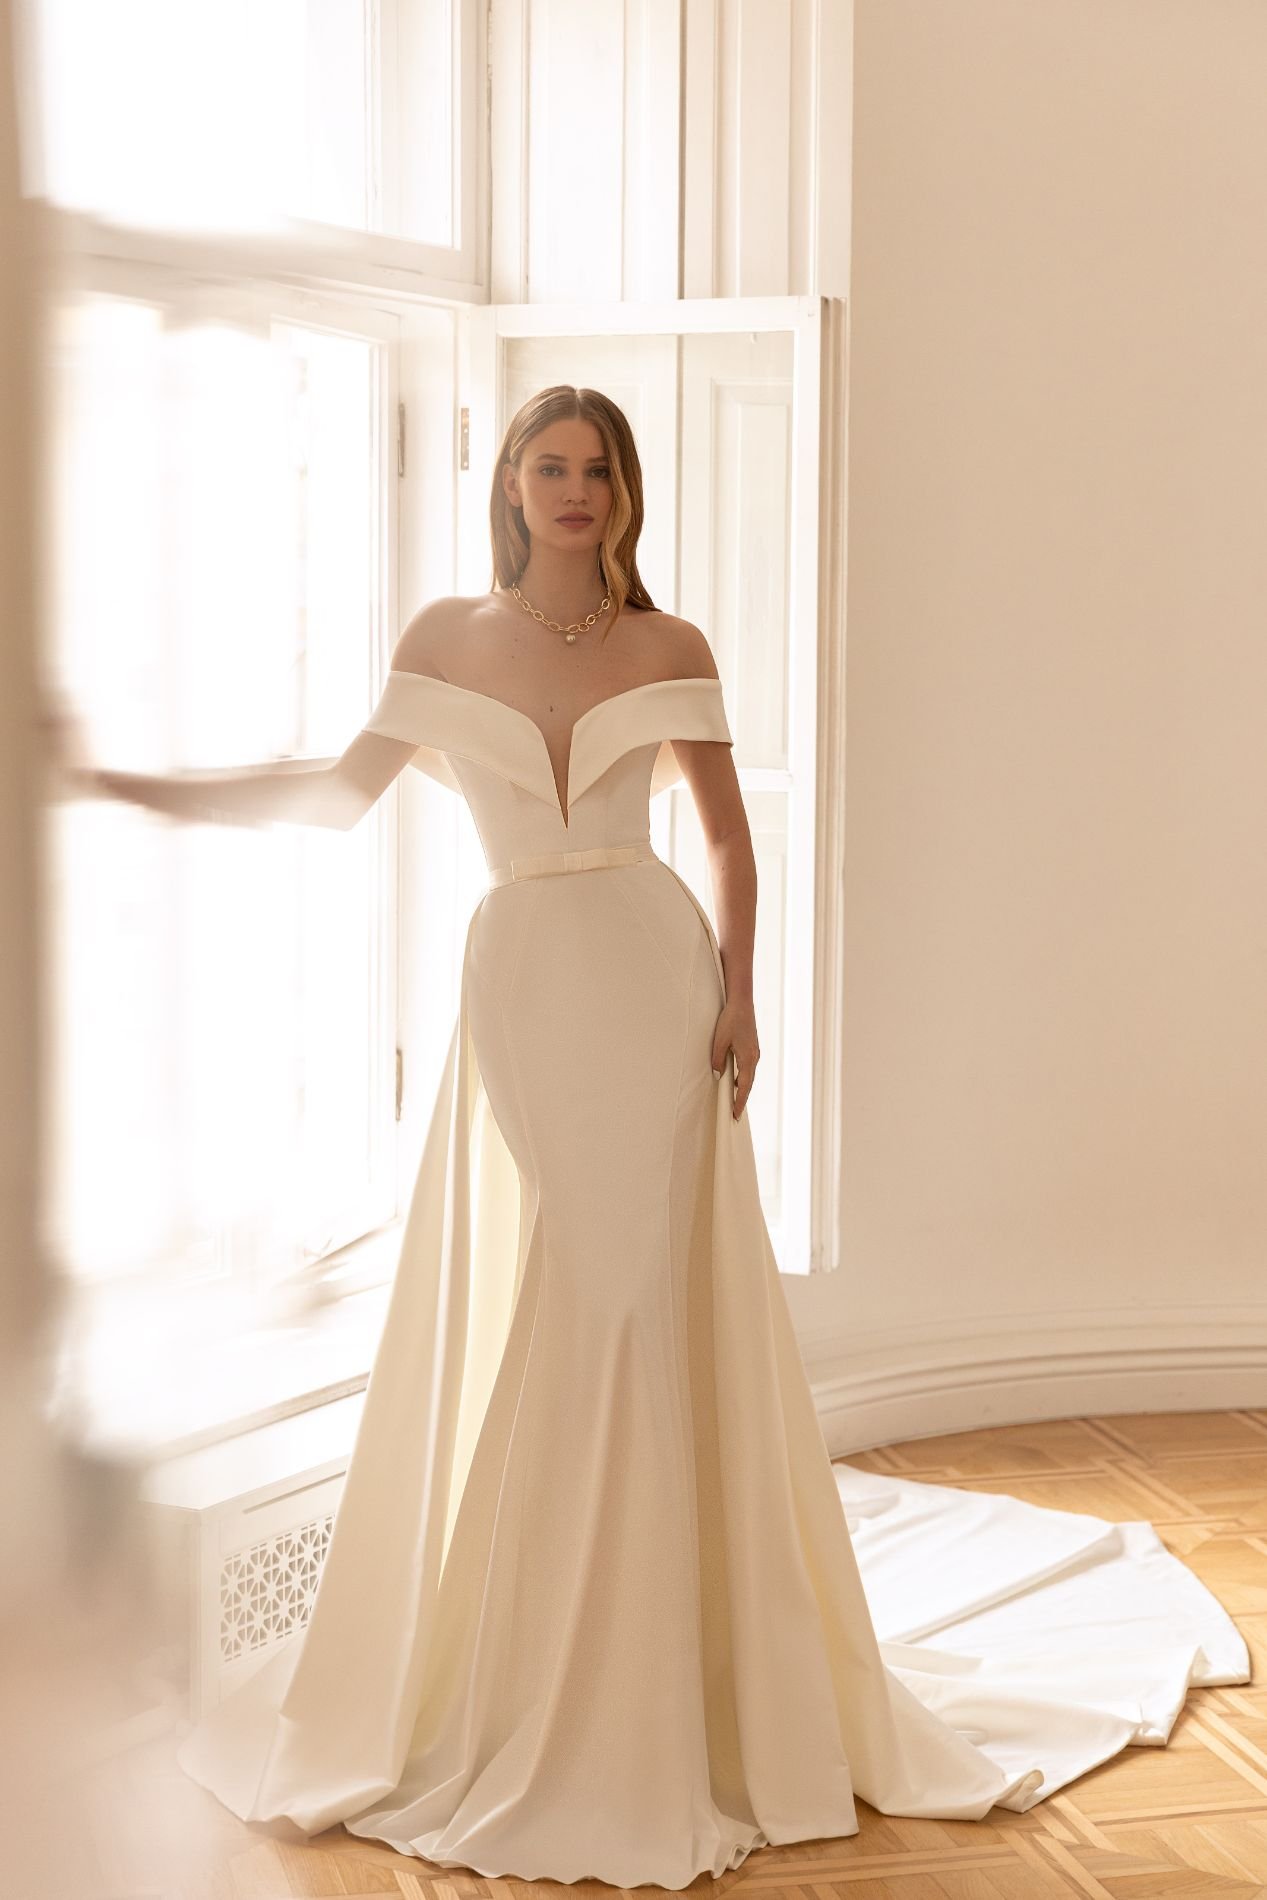 blanc-de-blanc-bridal-boutique-pittsburgh-cleveland-dress-wedding-gown-EVA-LENDEL-Renata-1.jpeg